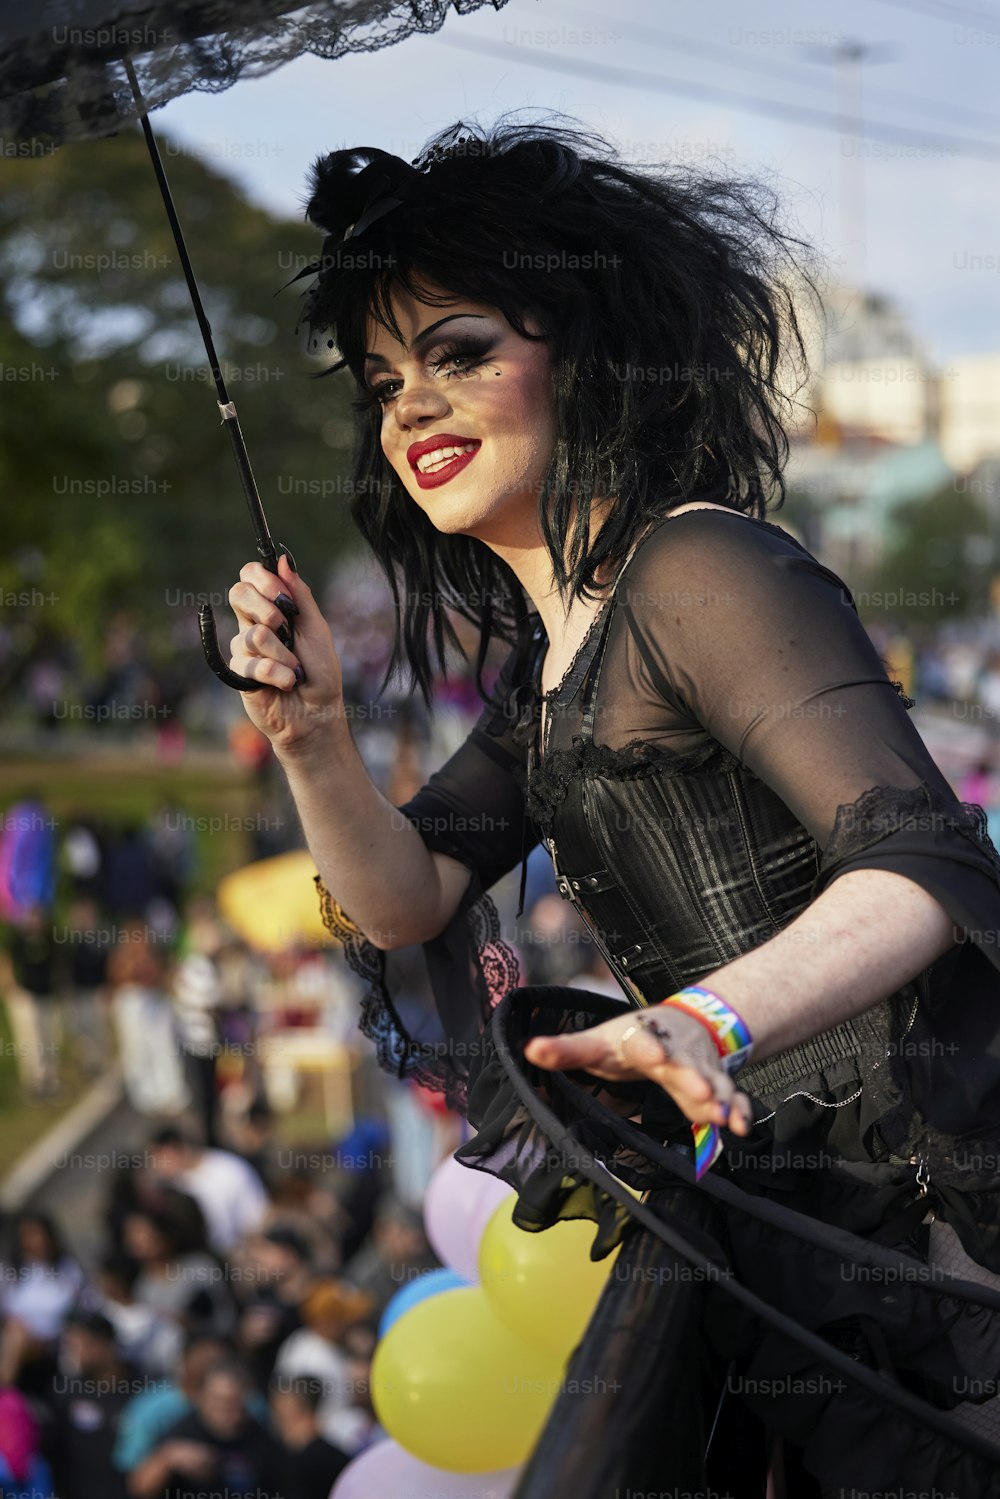 a woman in a black dress holding an umbrella